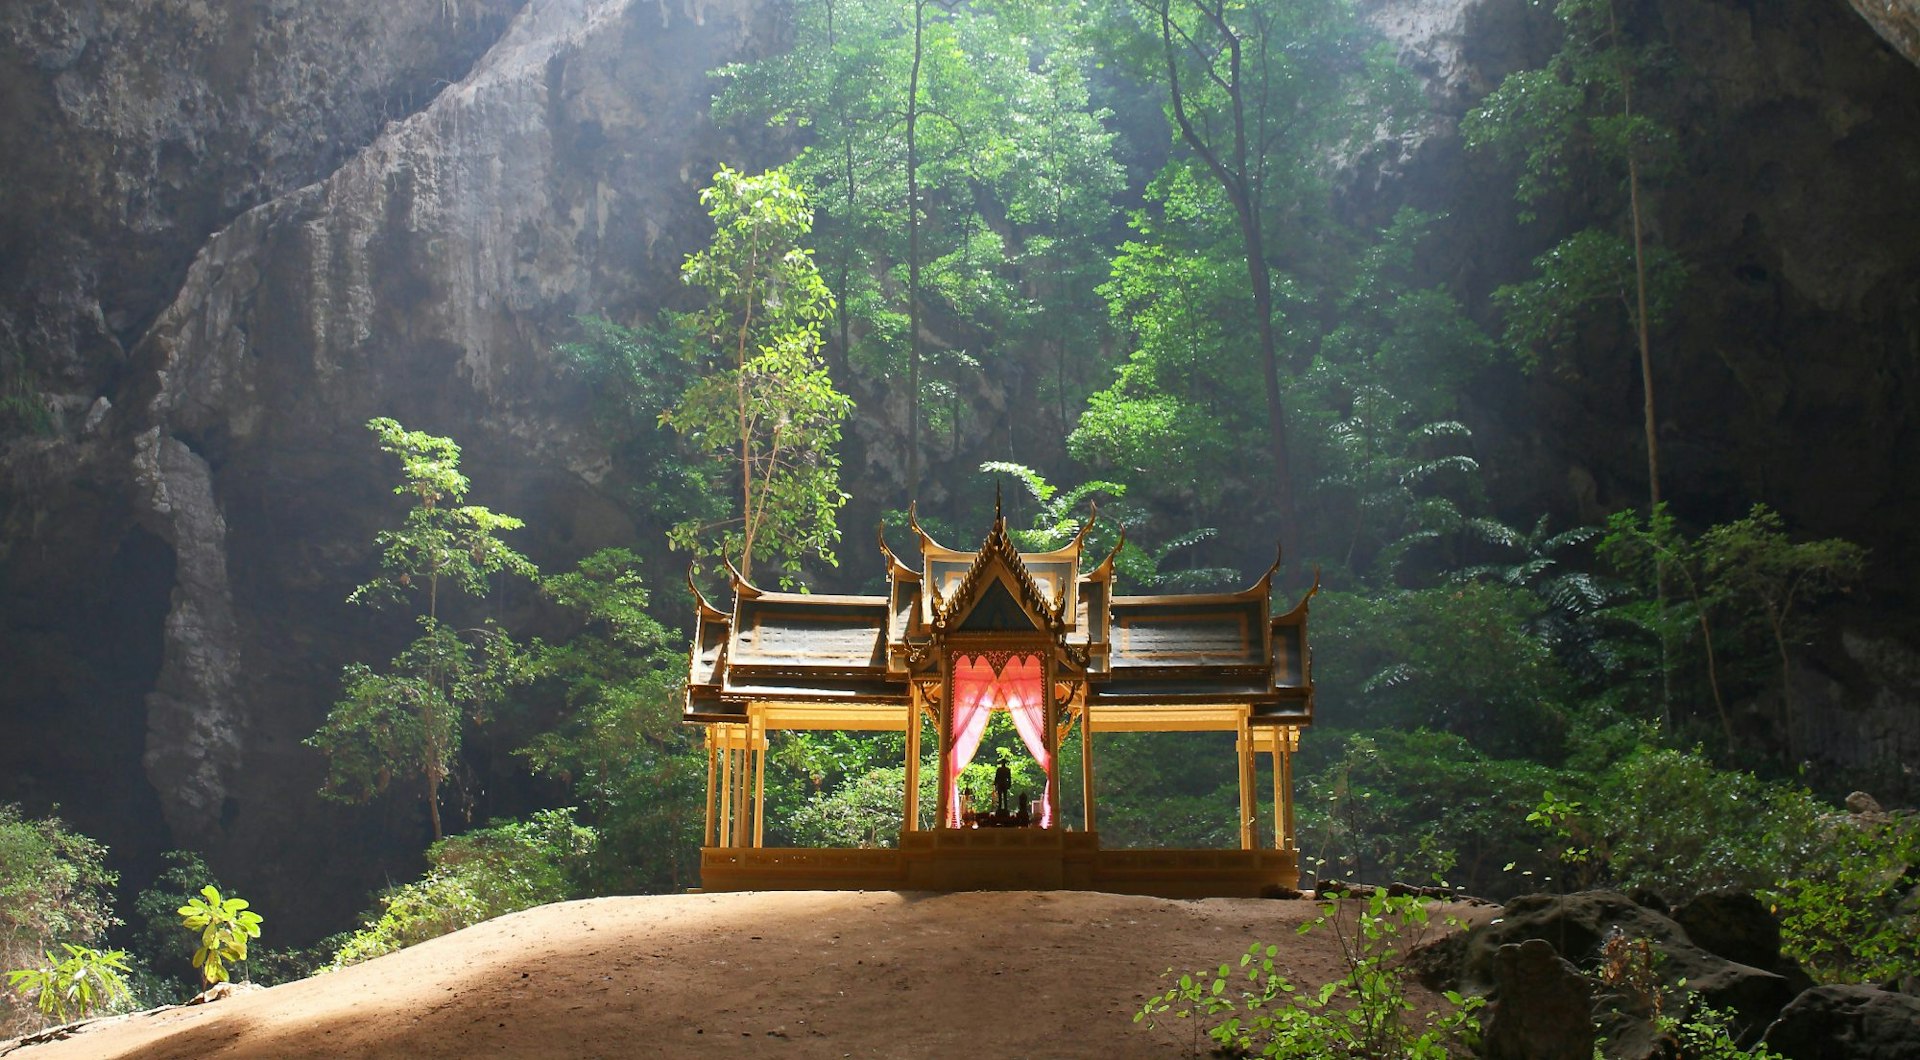 Phraya Nakhon Cave is a tourist attraction In Sam Roi Yot National Park at Prachuap Khiri Khan province in Thailand 